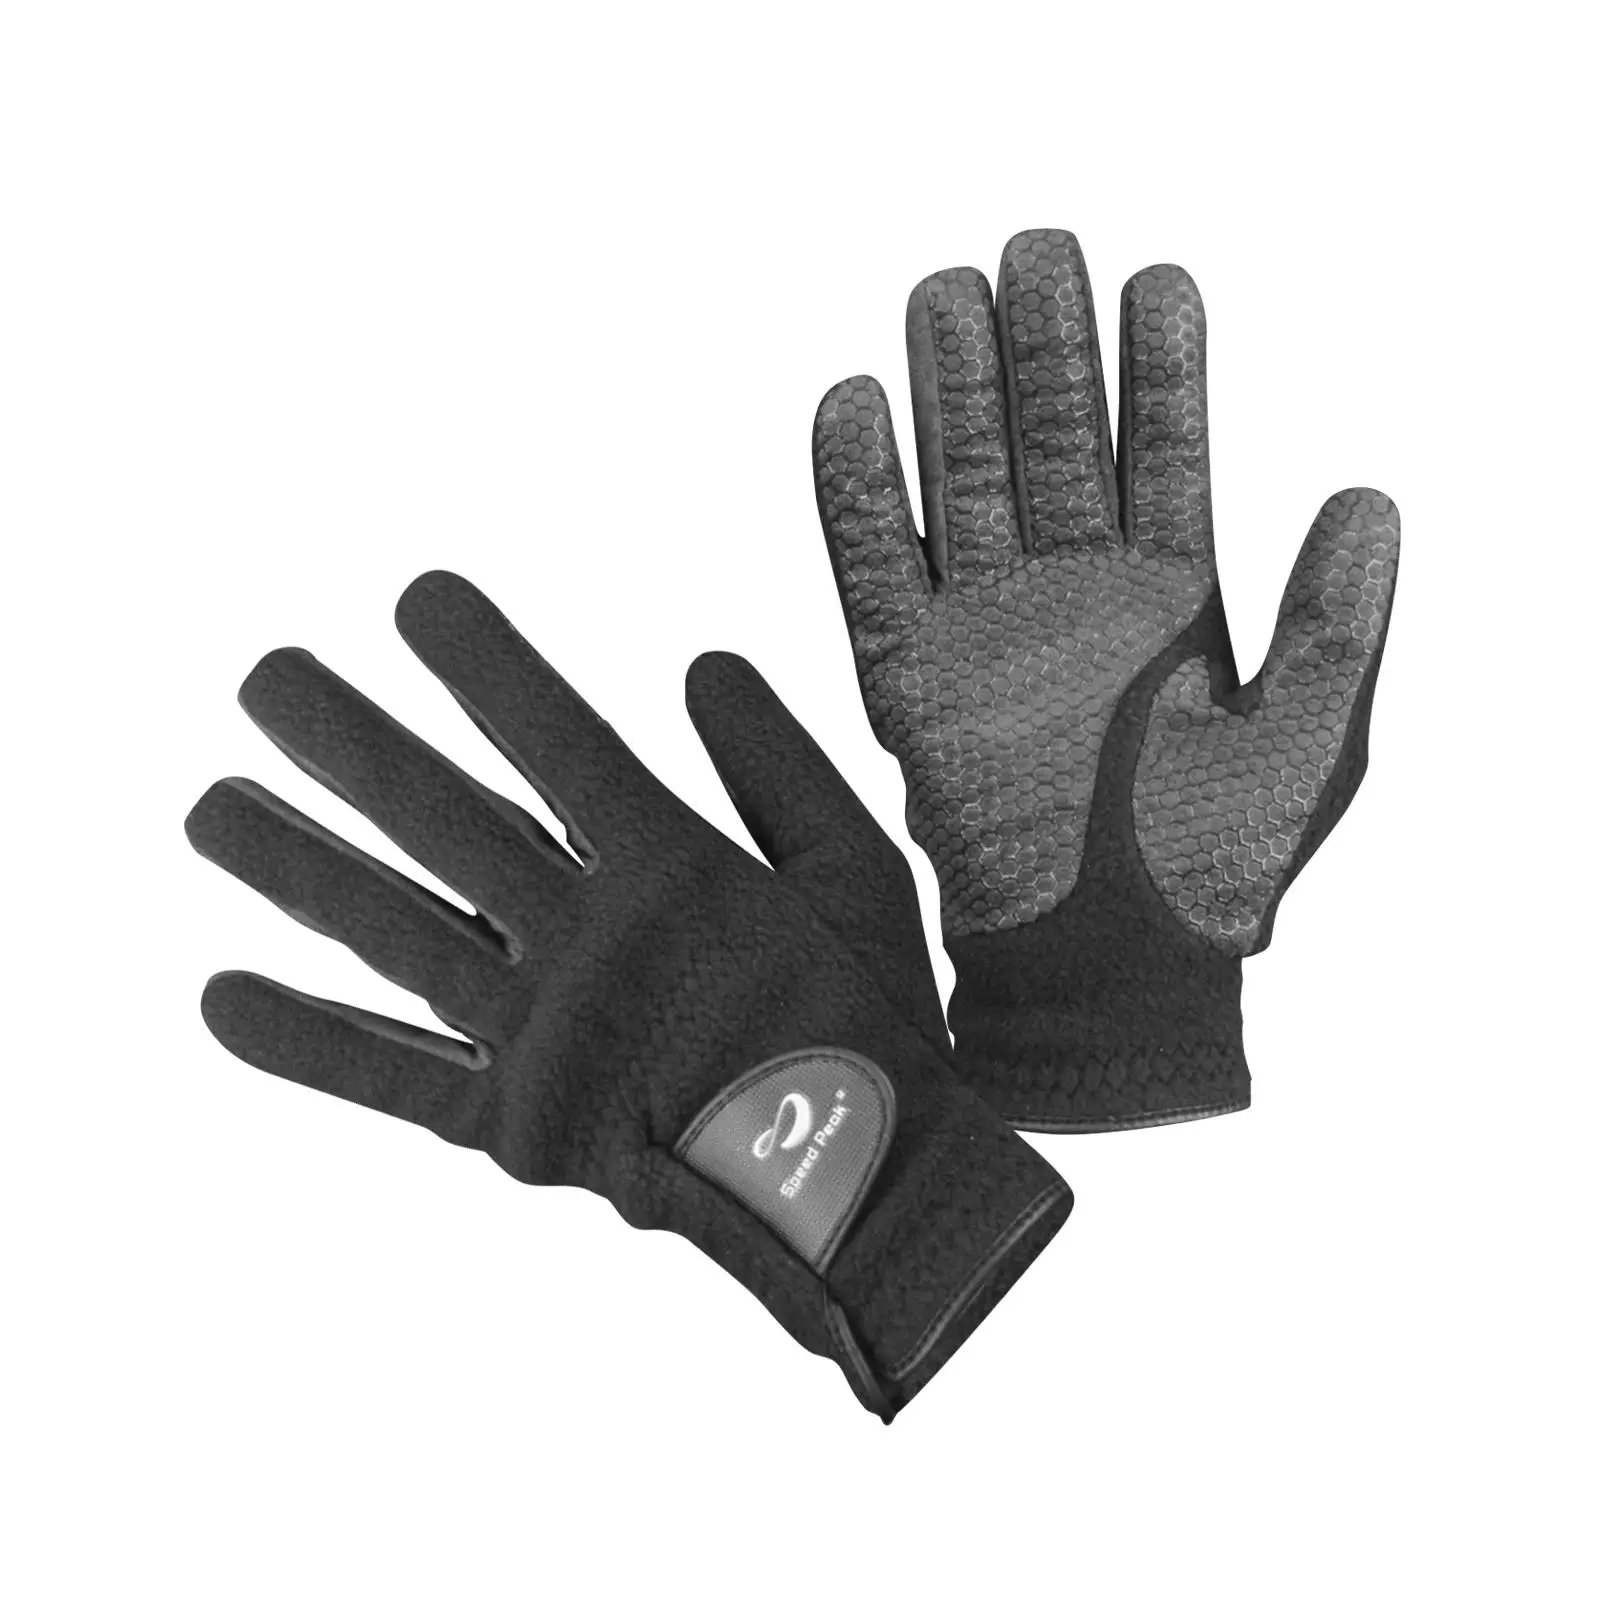 

1 Pair Golf Gloves Nonslip Premium Mitten Sport Gloves Golf Grip Training Gloves for Running Outdoor Camping Fishing Practice